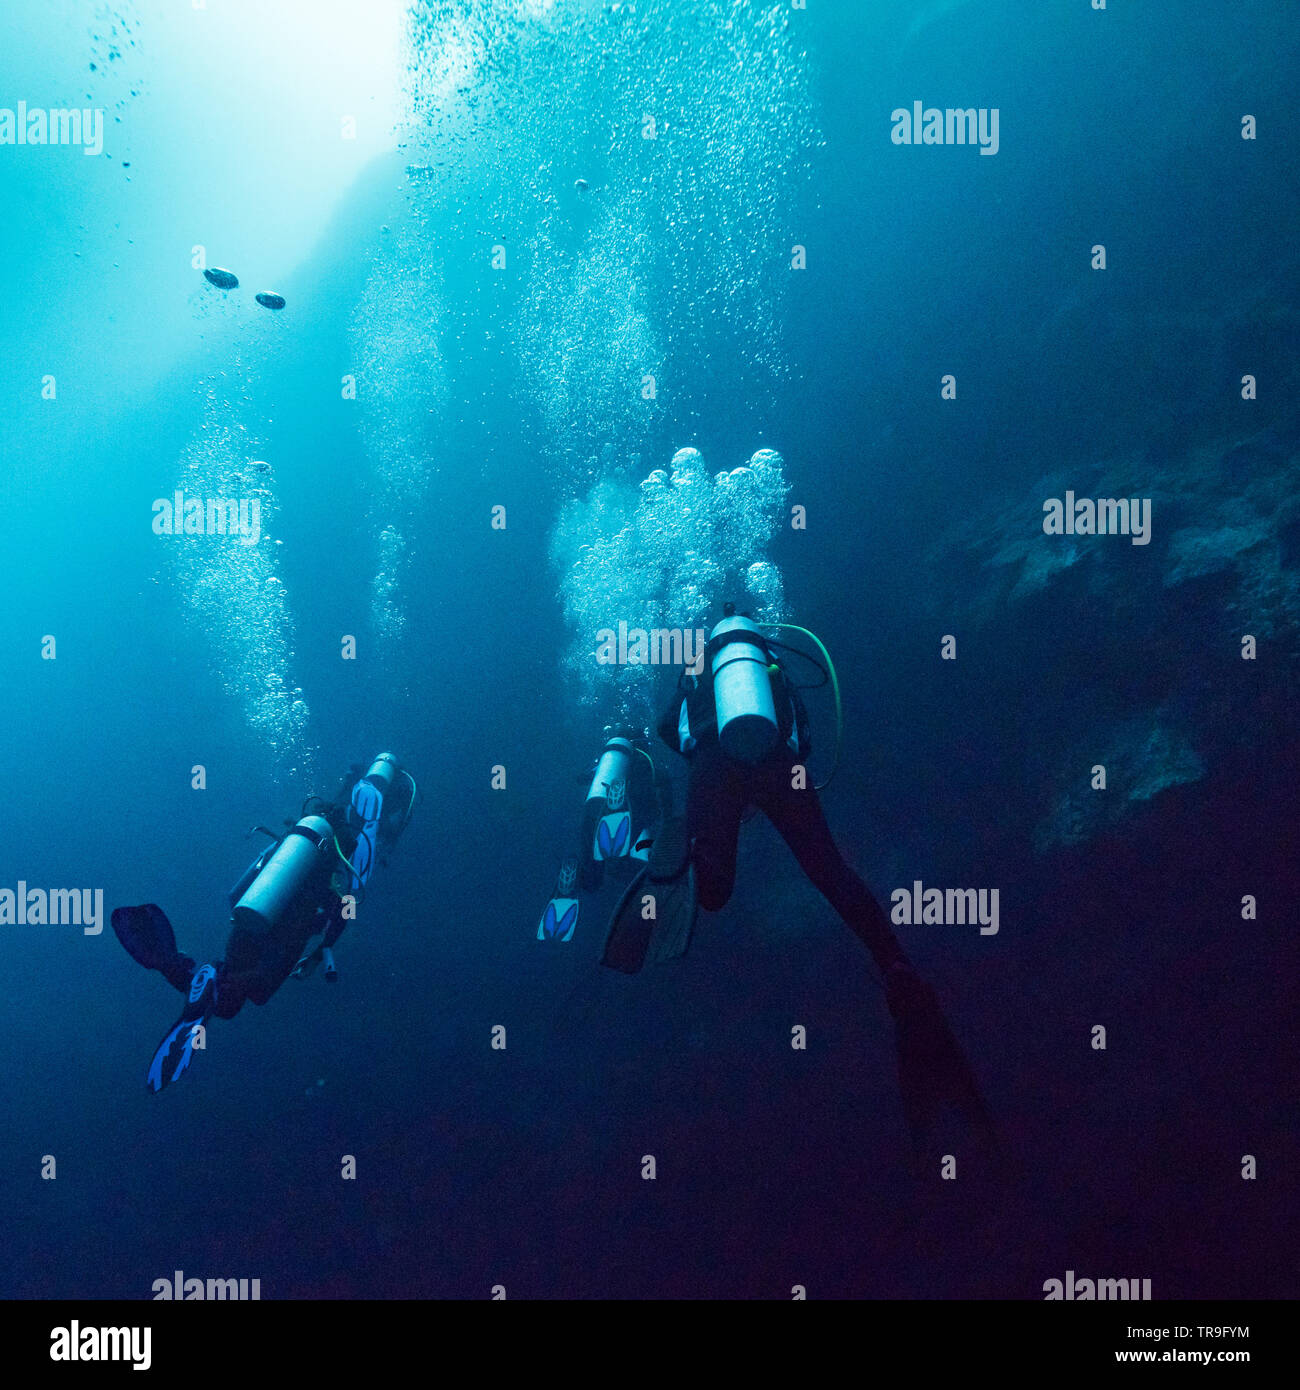 Scuba divers underwater, The Great Blue Hole, Belize Barrier Reef ...